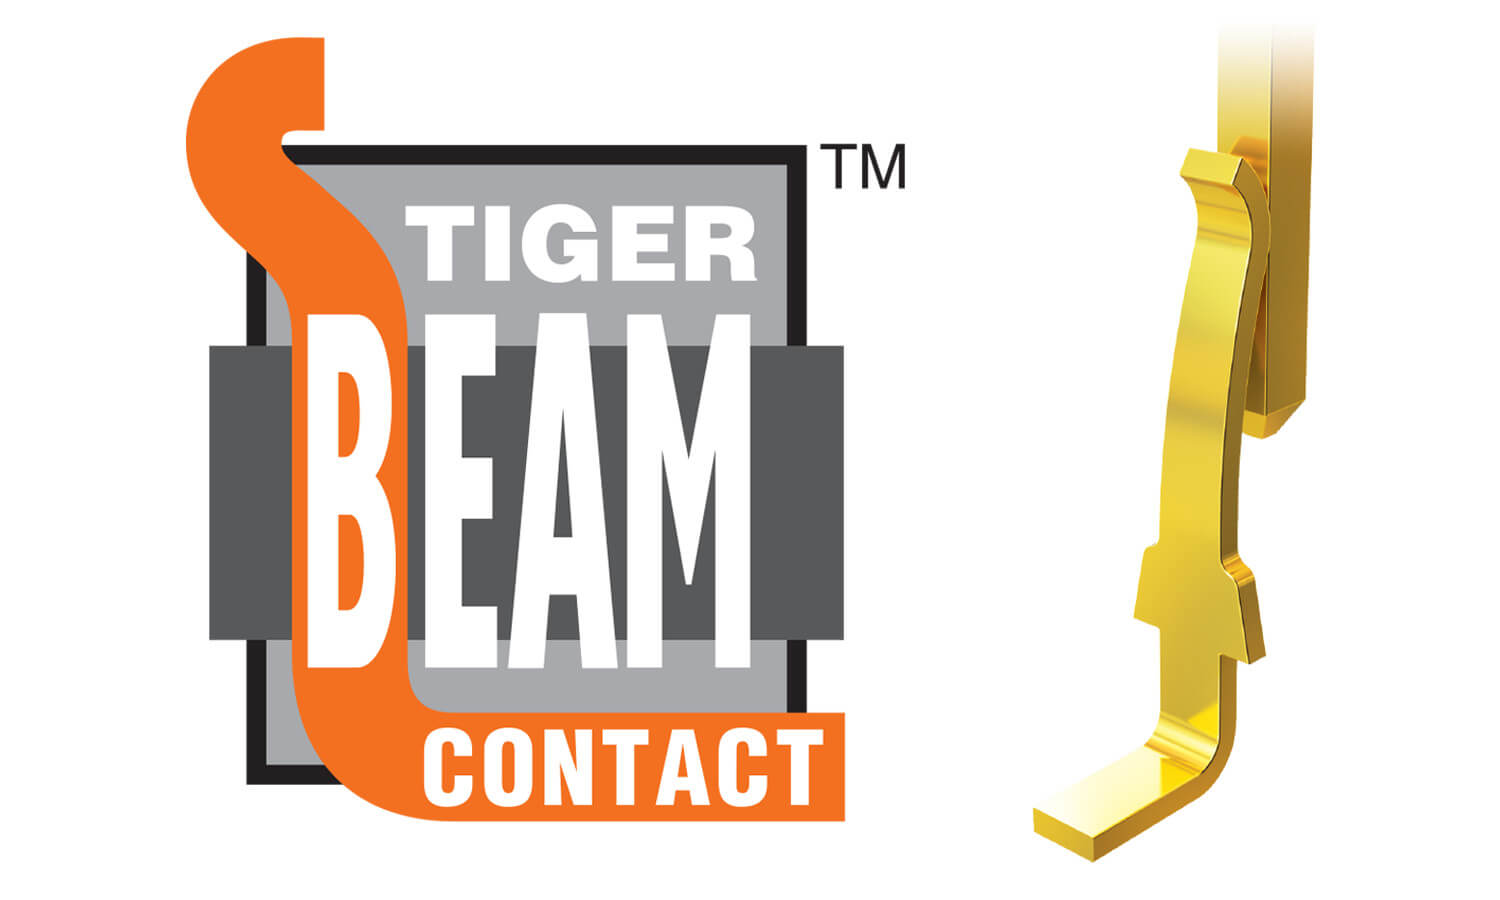 Tiger Beam Contact